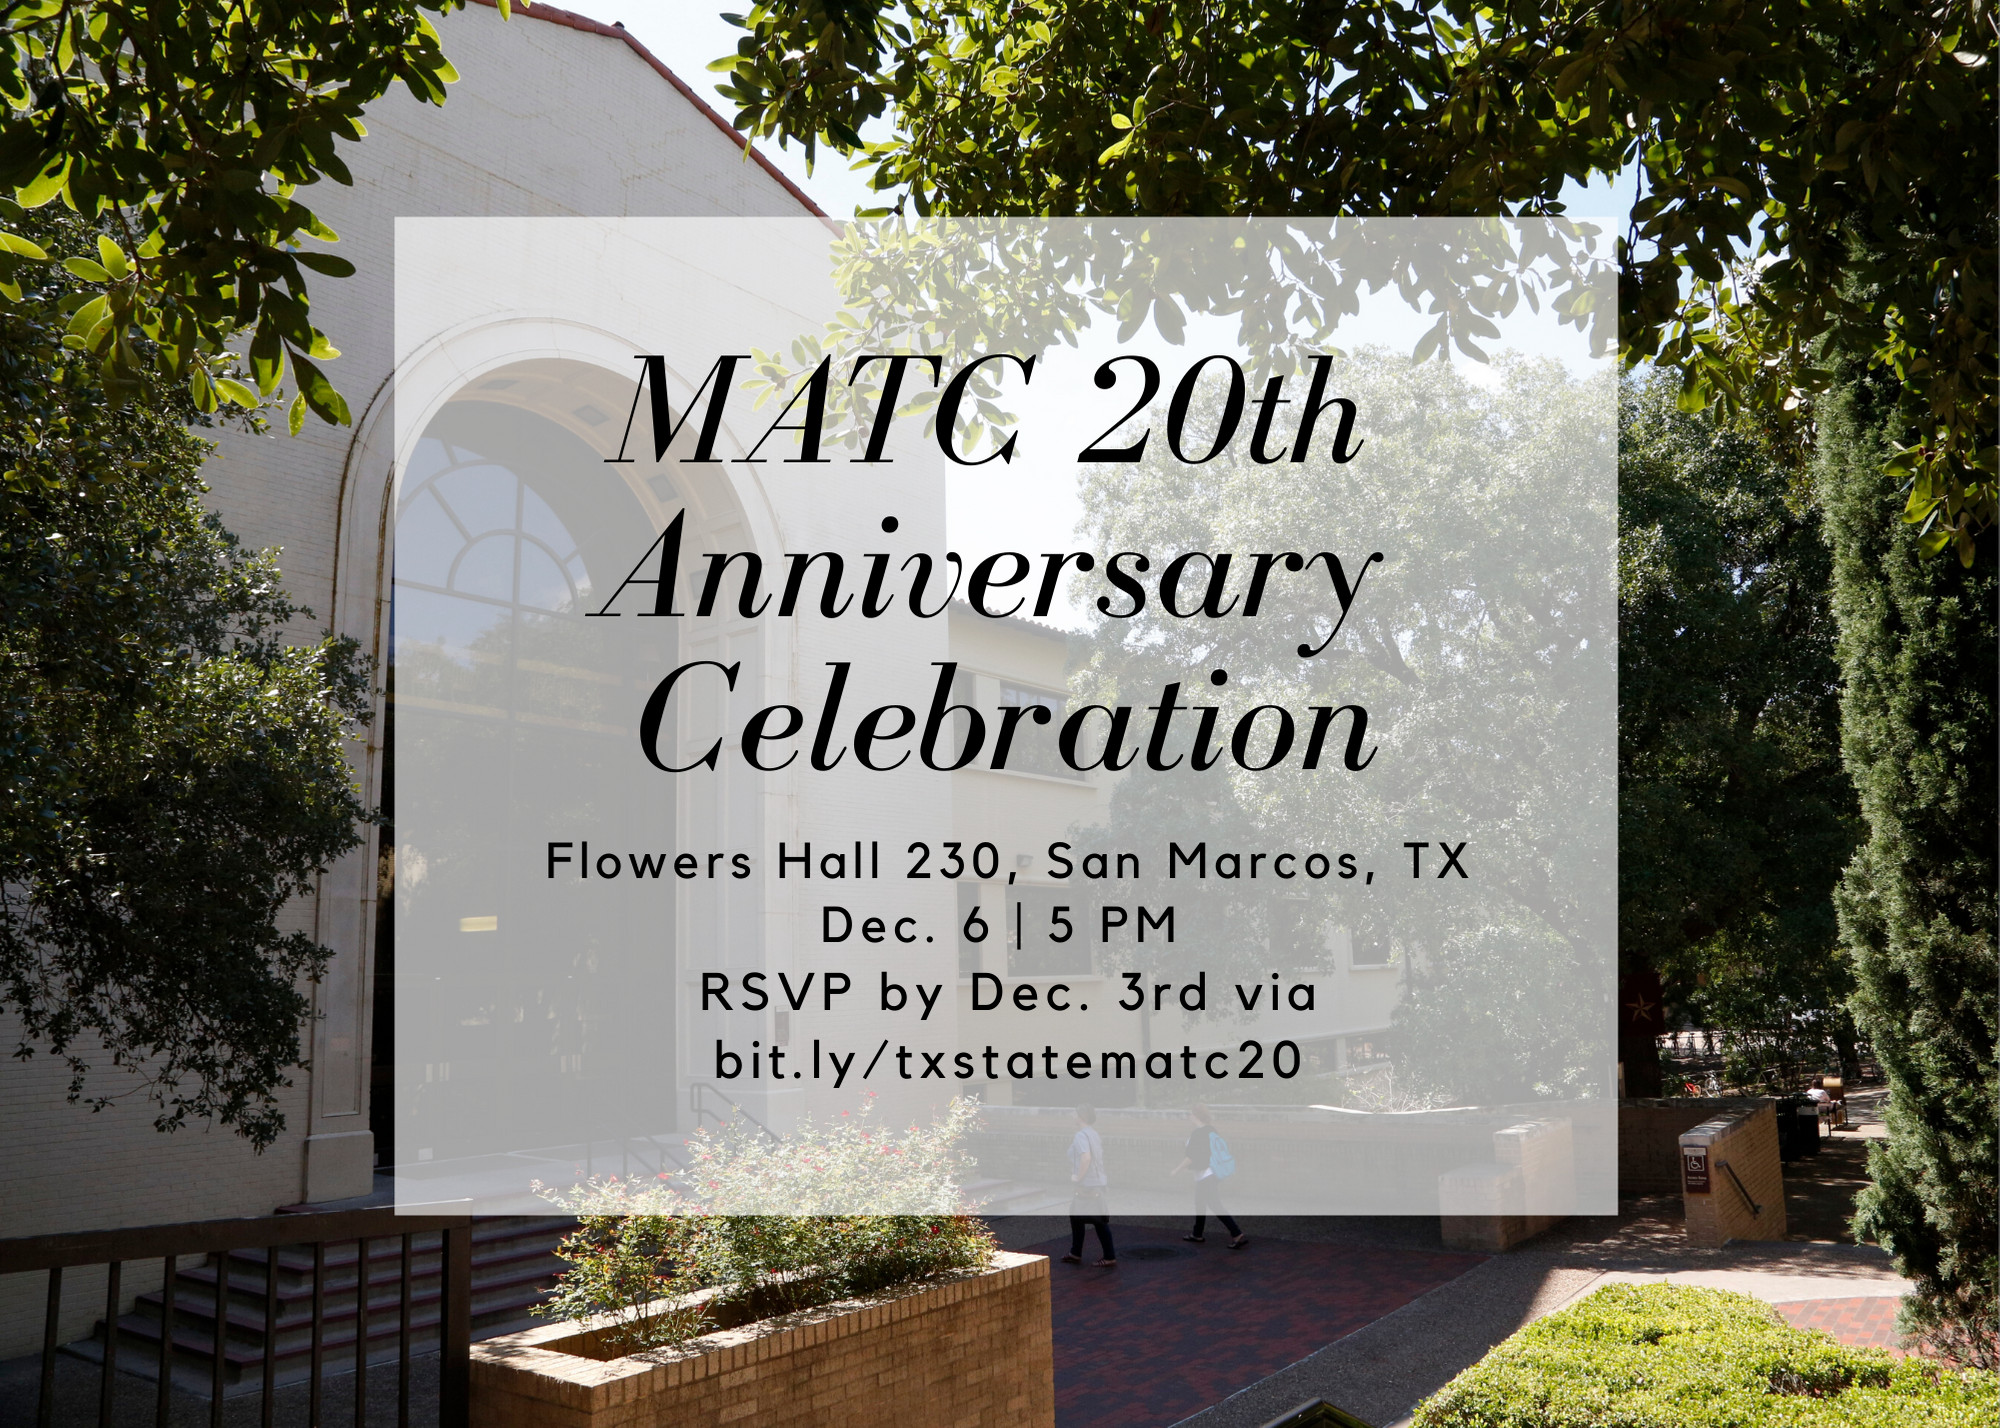 MATC 20th Anniversary Celebration announcement photo.